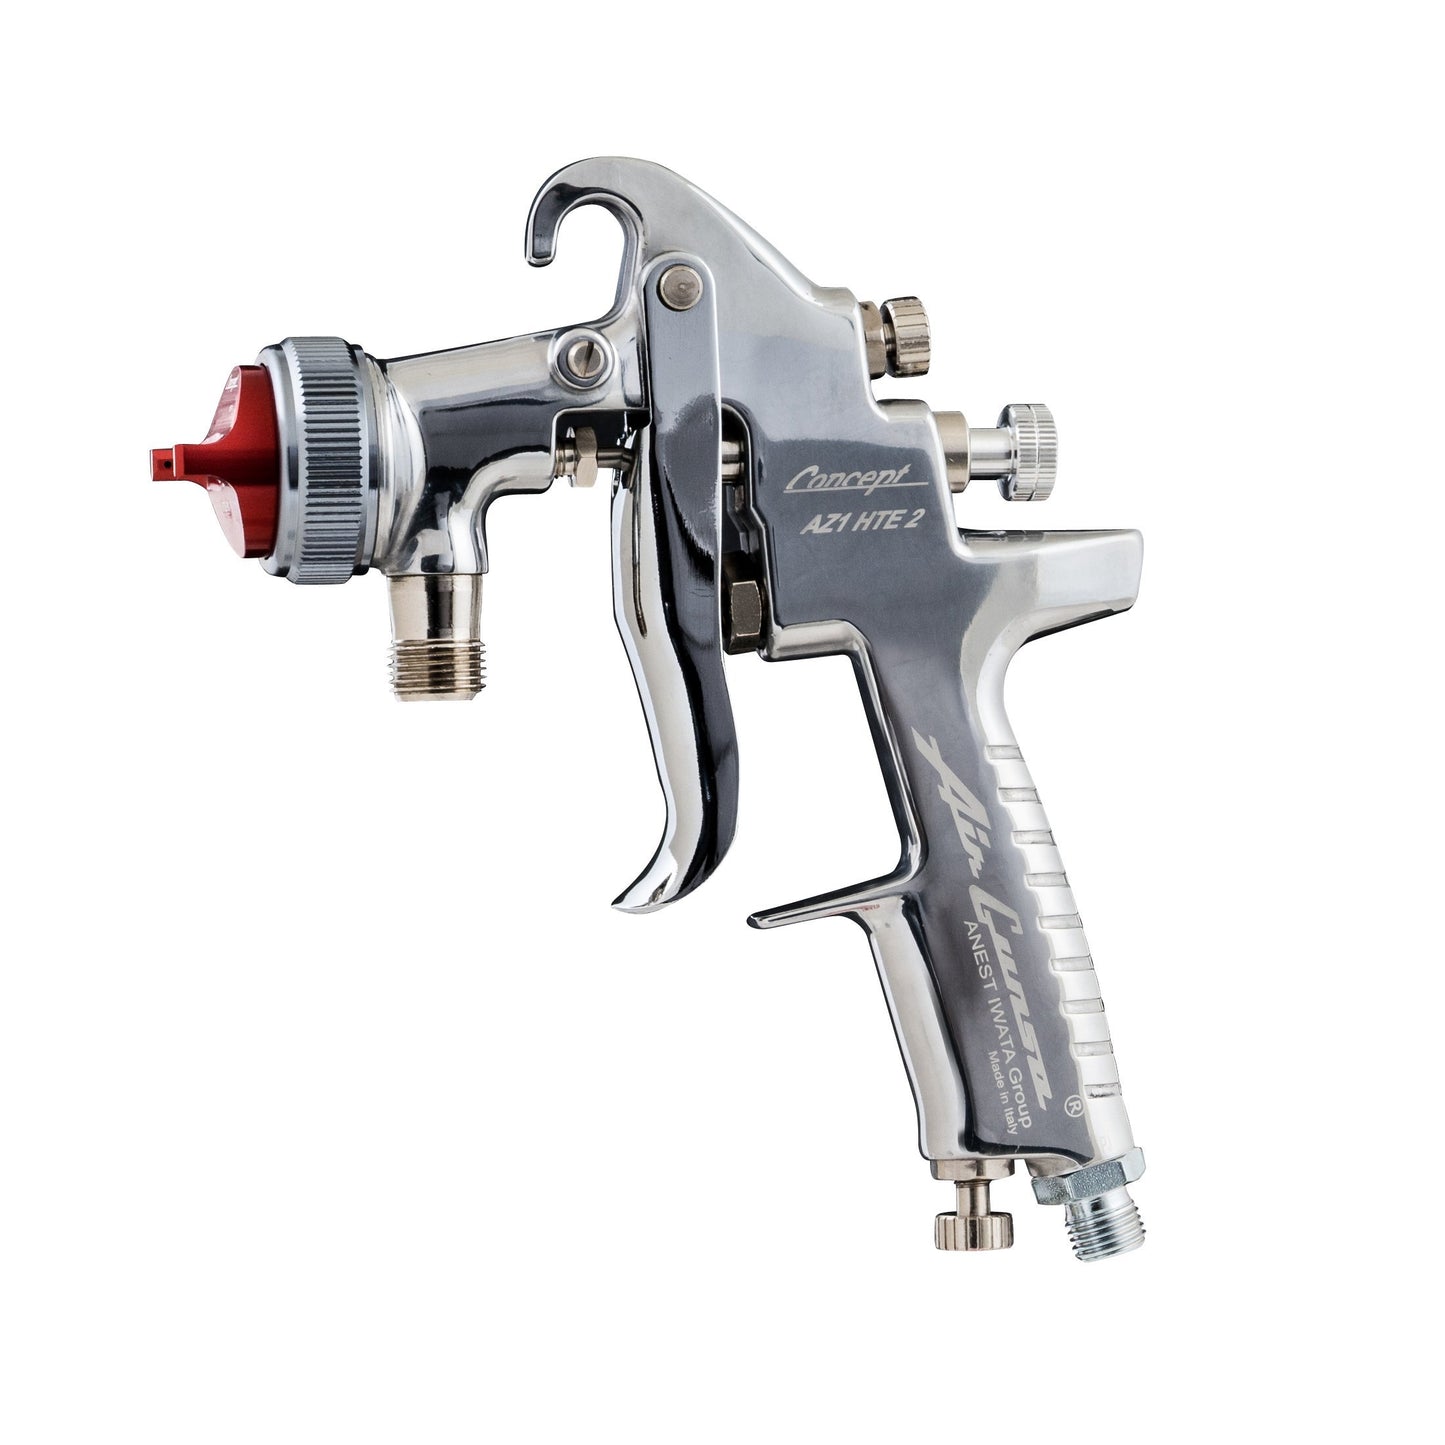 Anest Iwata Concept AZ1 HTE Pressure Feed Spray Paint Gun 1.0mm